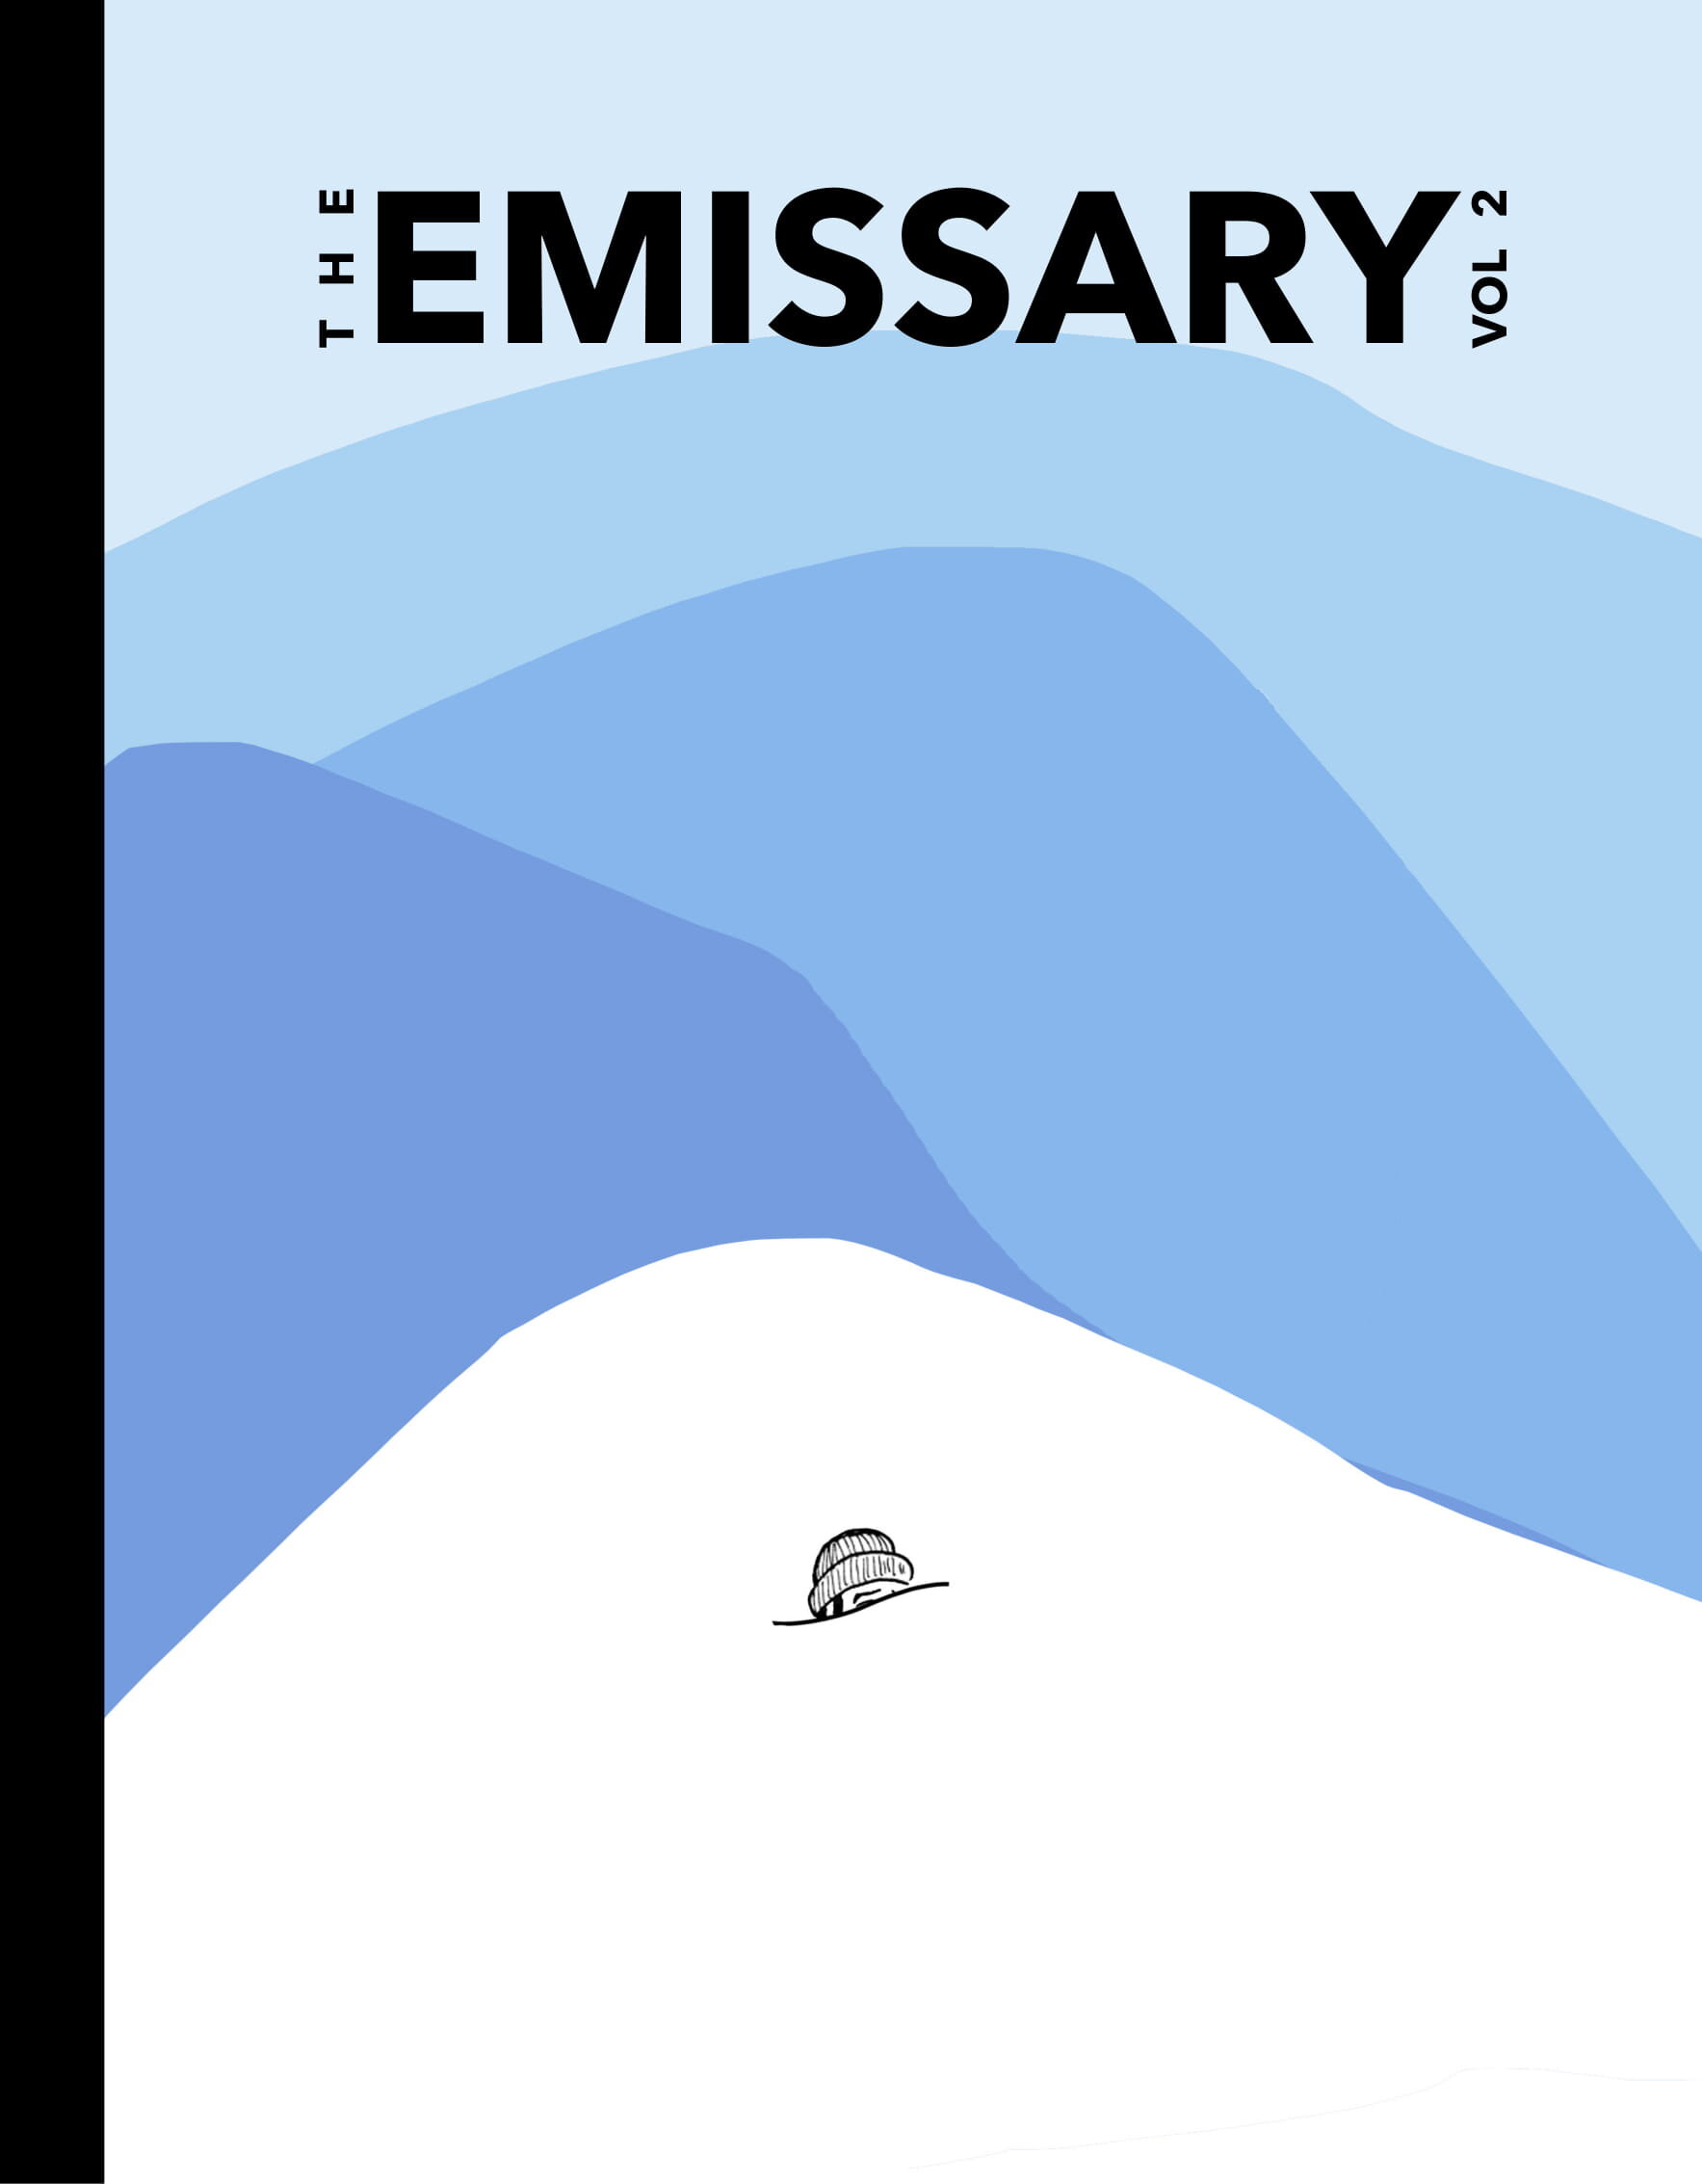 The Emissary-01.jpg